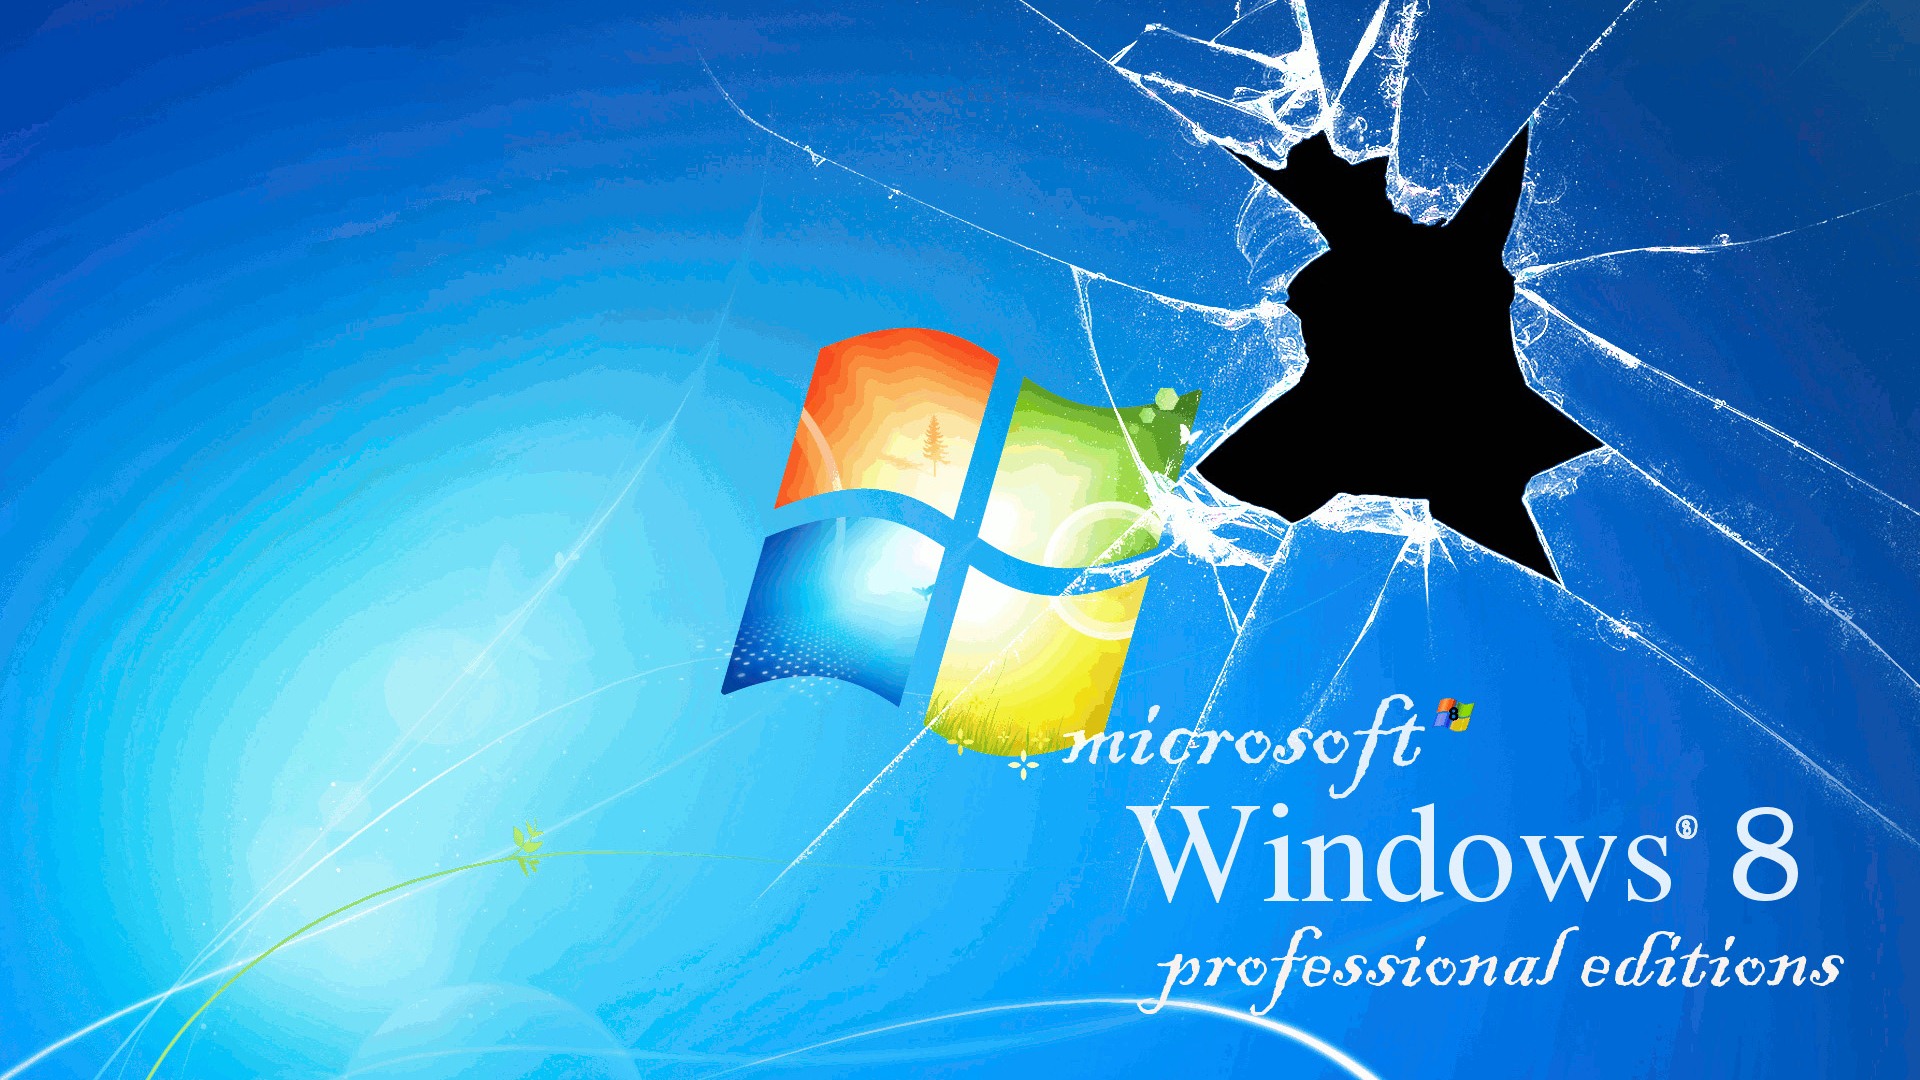 Windows 8 主题壁纸 (二)3 - 1920x1080